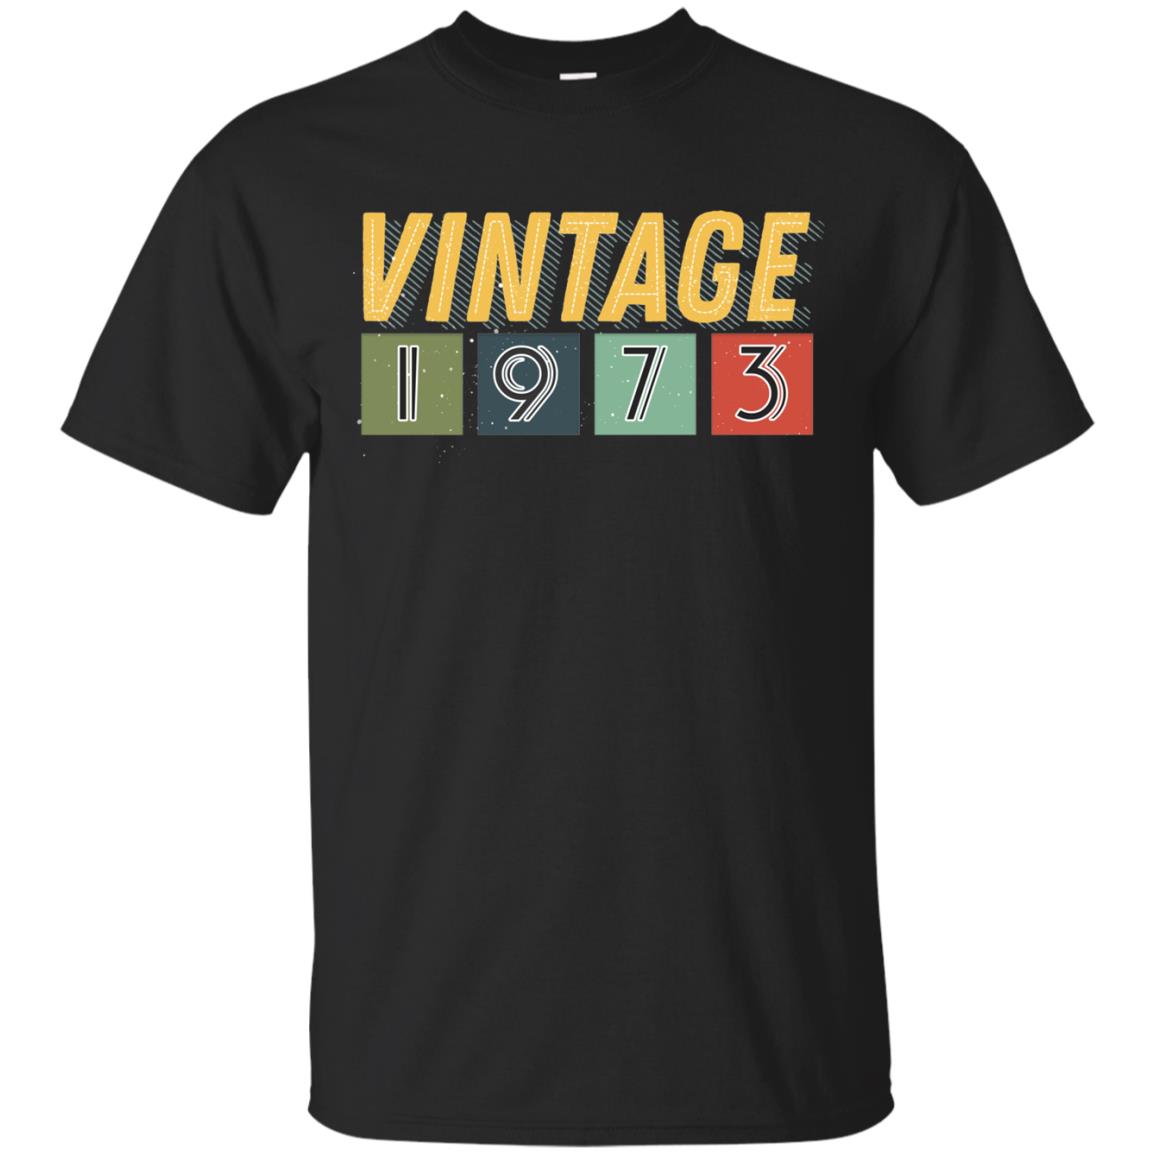 Vintage 1973 45th Birthday Gift Shirt For Mens Or WomensG200 Gildan Ultra Cotton T-Shirt